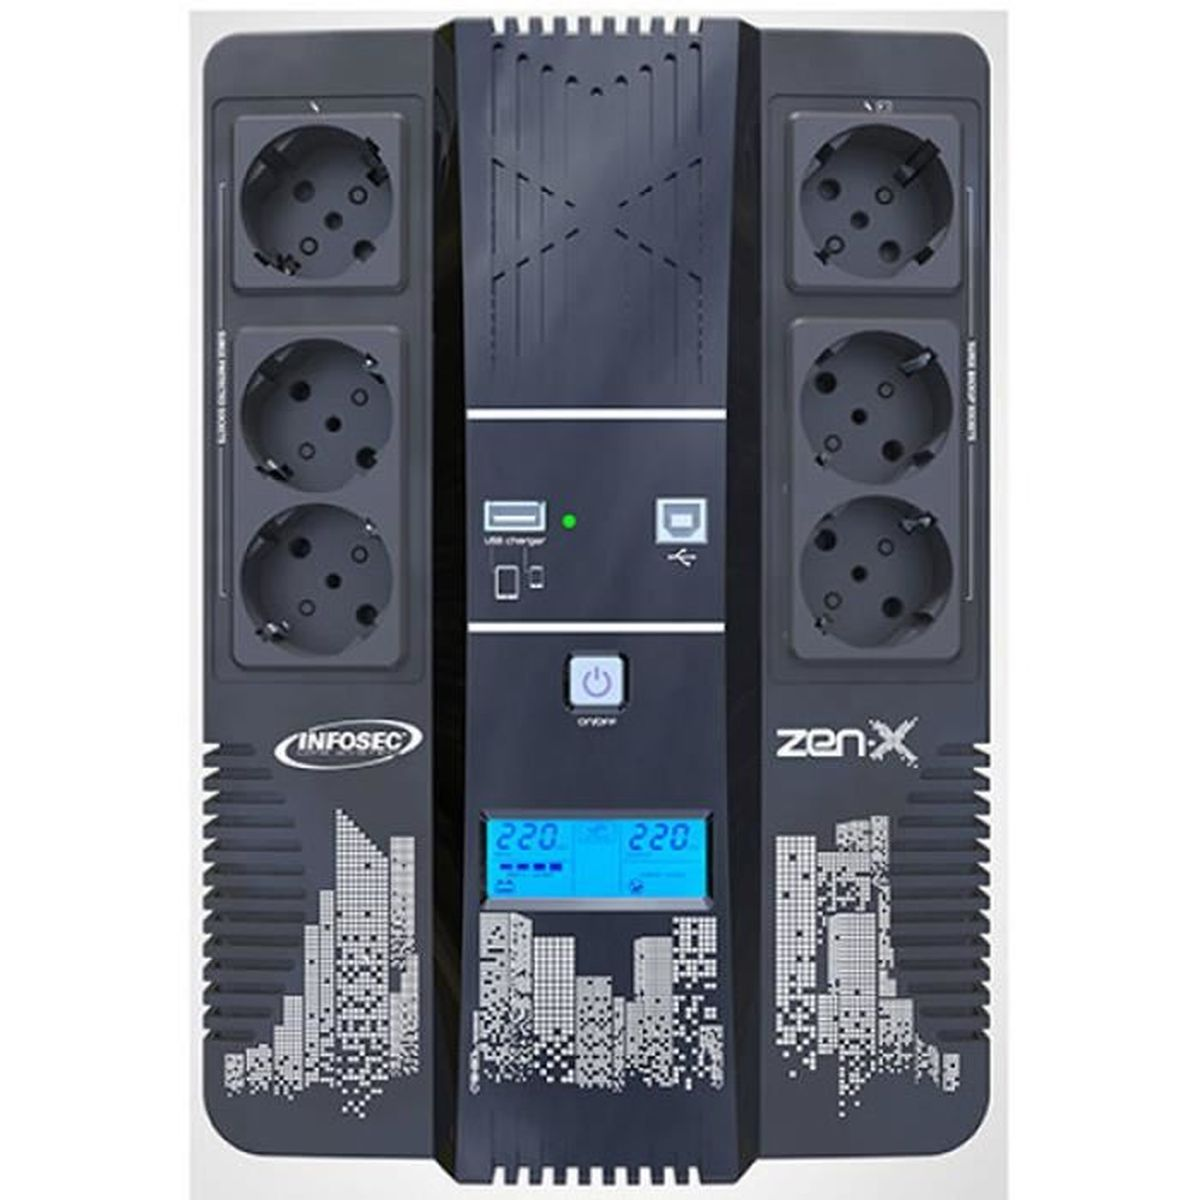 FR/SCHUKO, INFOSEC 800 Zen-X Wechselrichter